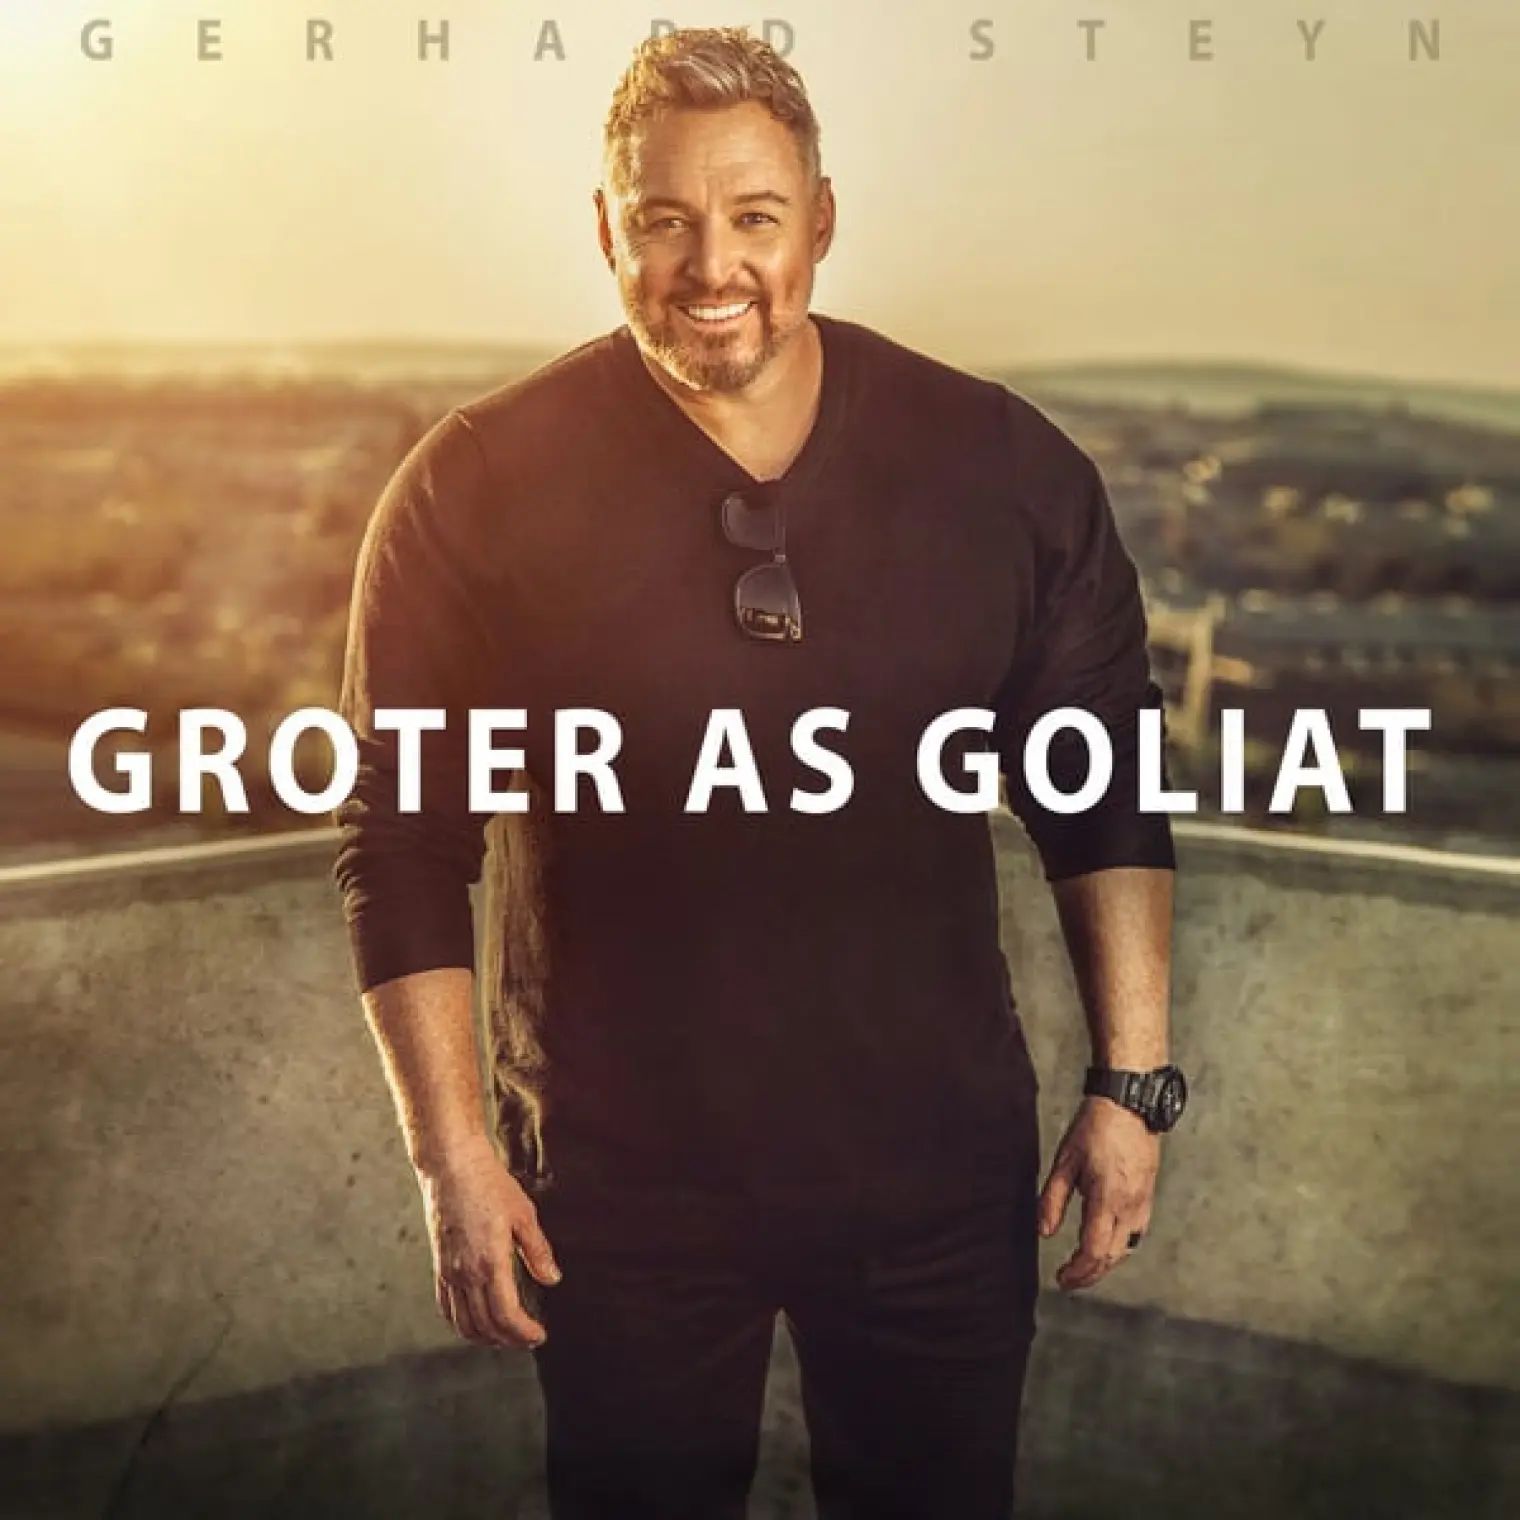 Groter as Goliat -  Gerhard Steyn 